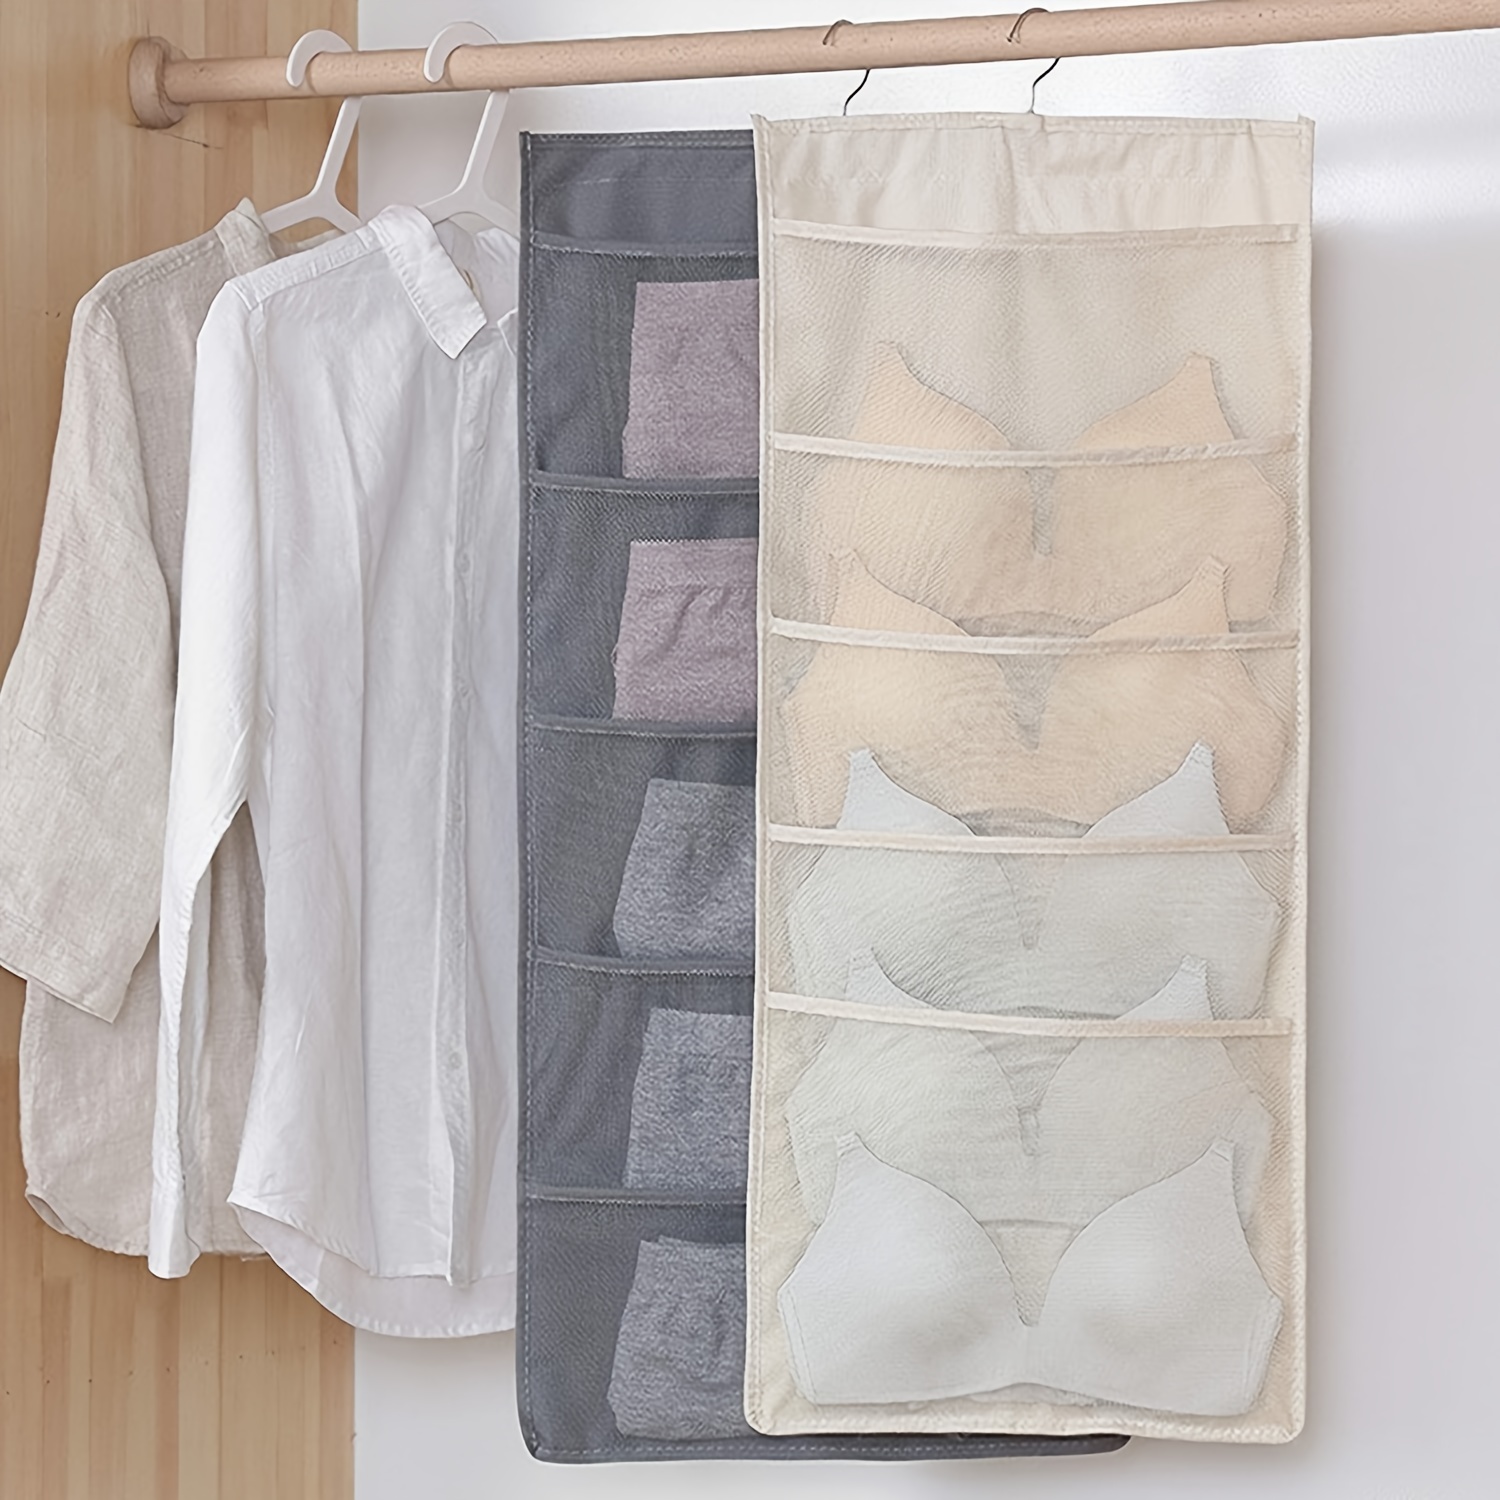 Aofa Underwear Organizer 30 Mesh Pockets Hanging Storage Organiser with  Metal Hanger, Dual-Sided Hanging Closet Organizer for Underwear, Stocking, Bra and Sock 